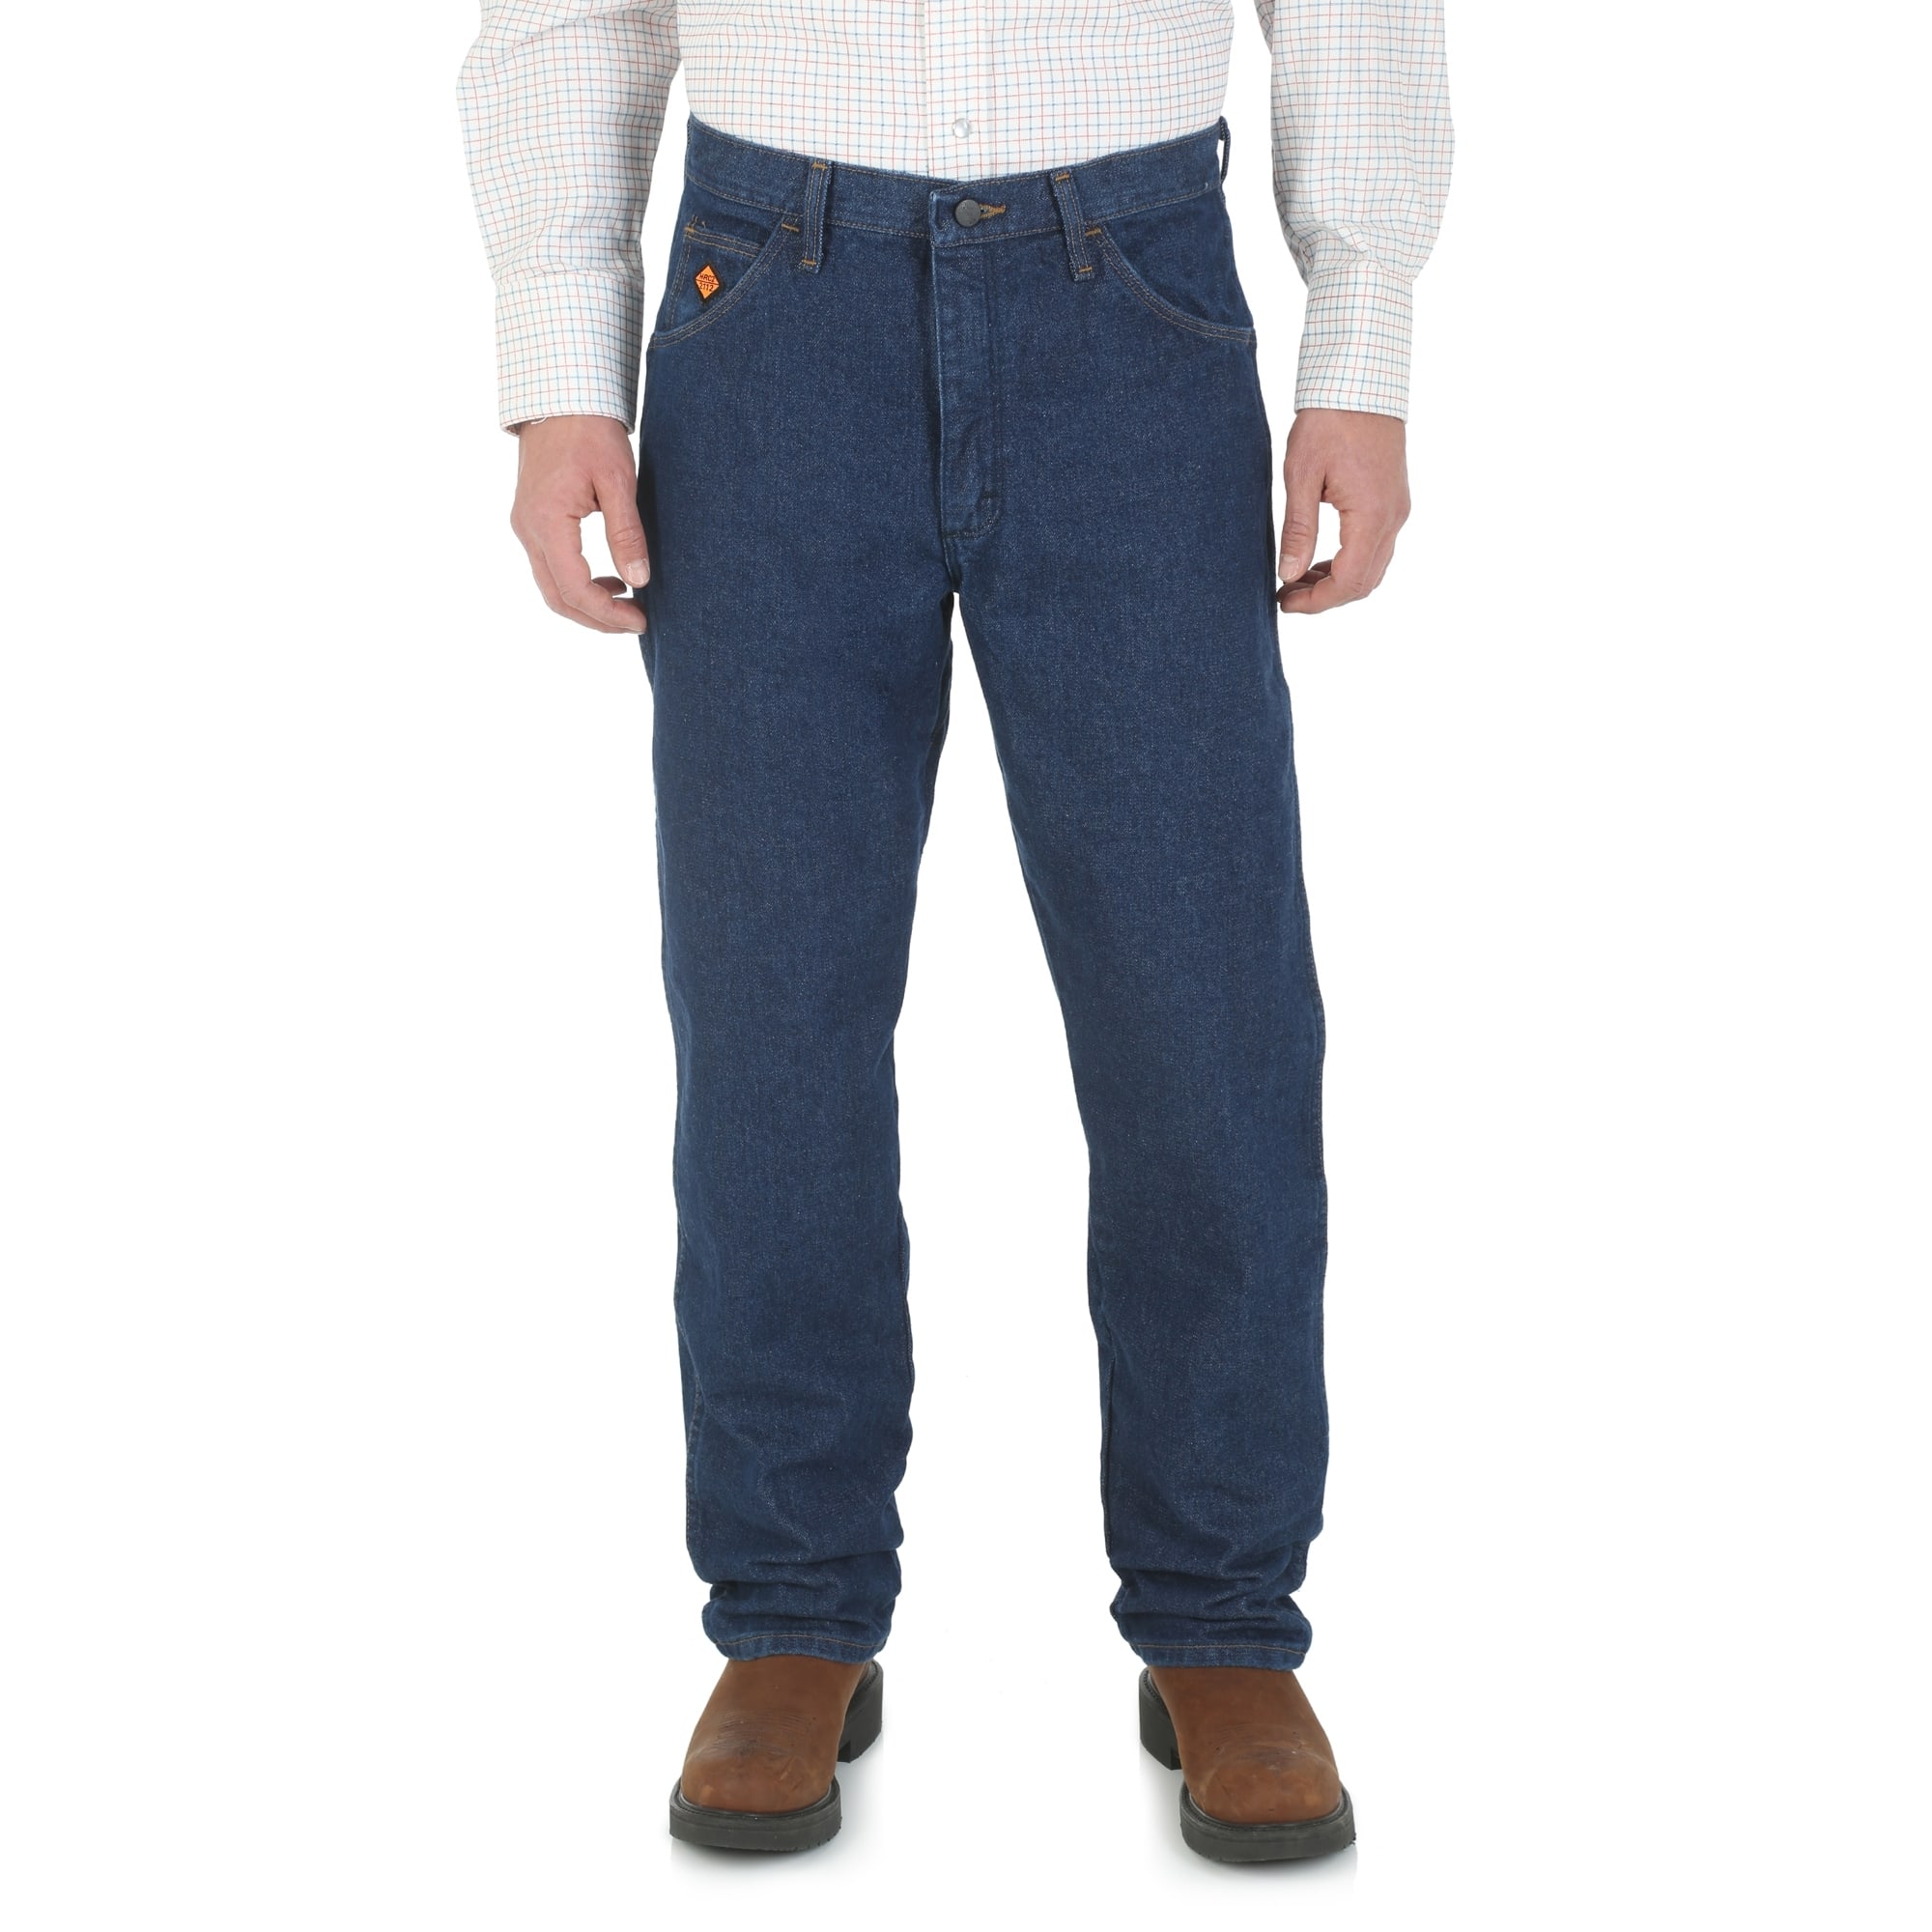 Lapcofr FR Modern Carpenter Jeans